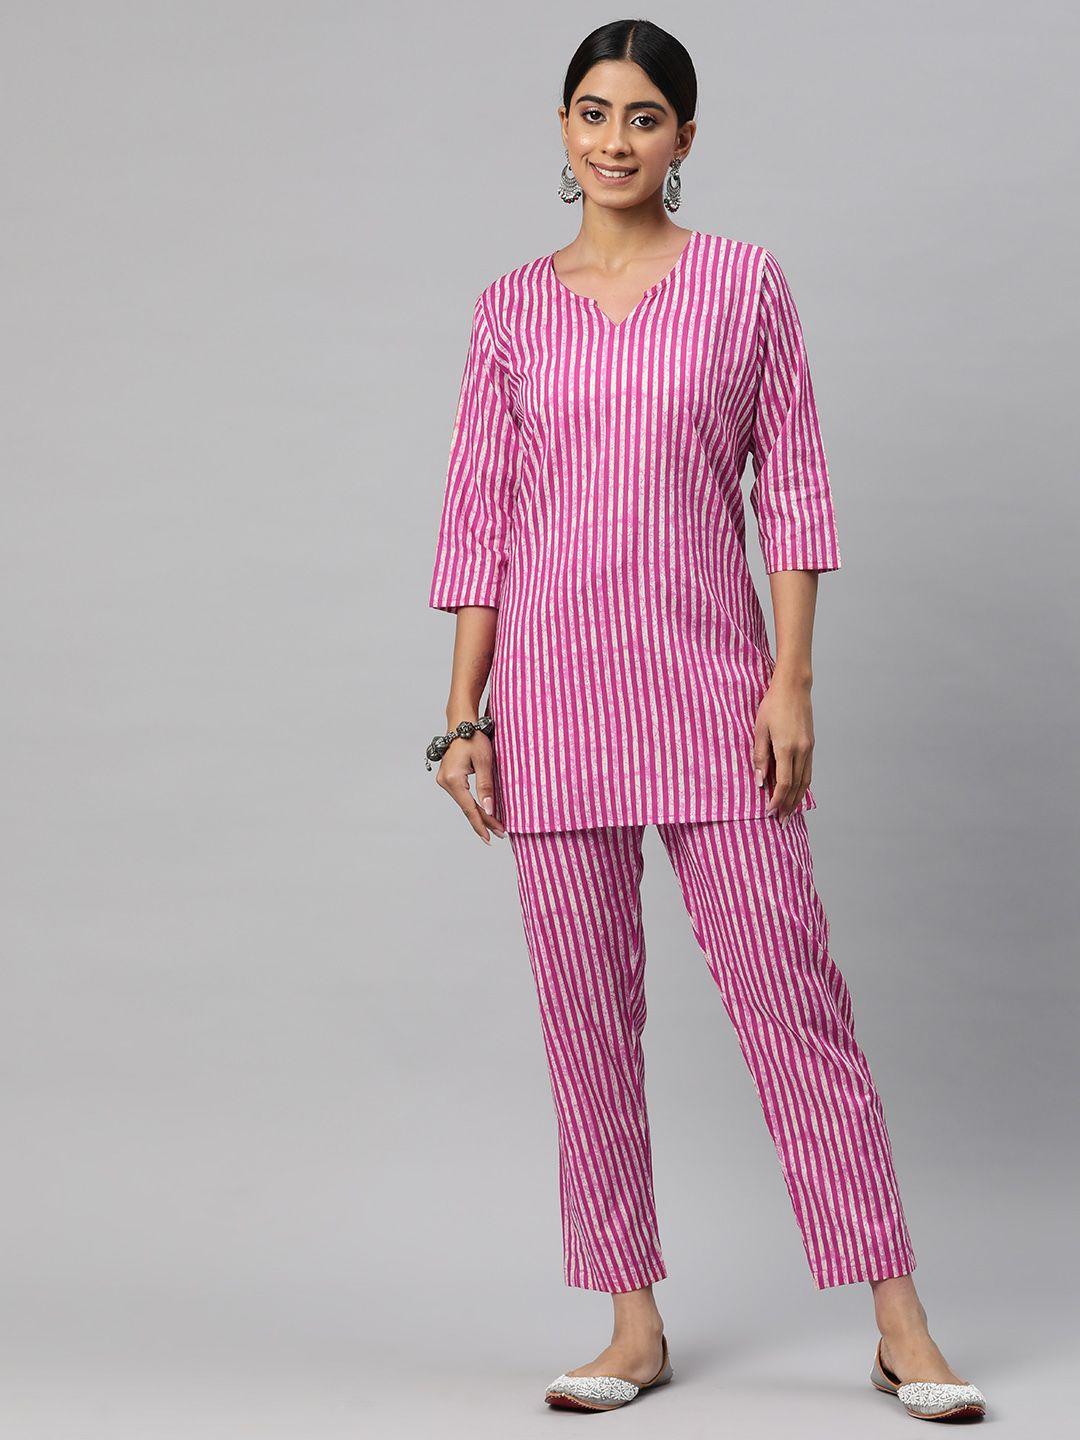 readiprint fashions women striped ethnic co-ords